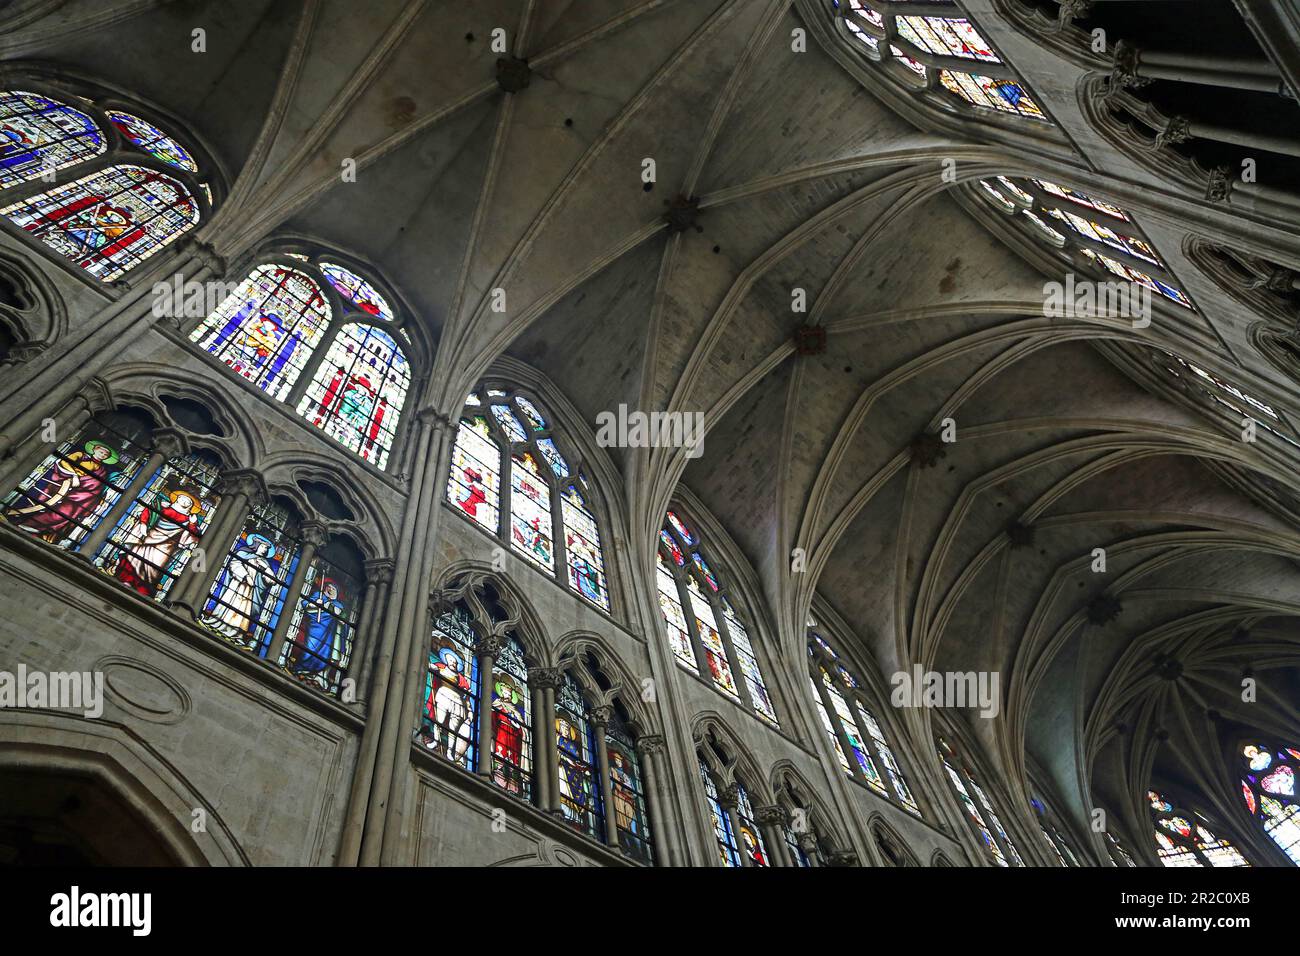 The ribbed vault of the main nave - Saint-Severin Church - Paris, France Stock Photo